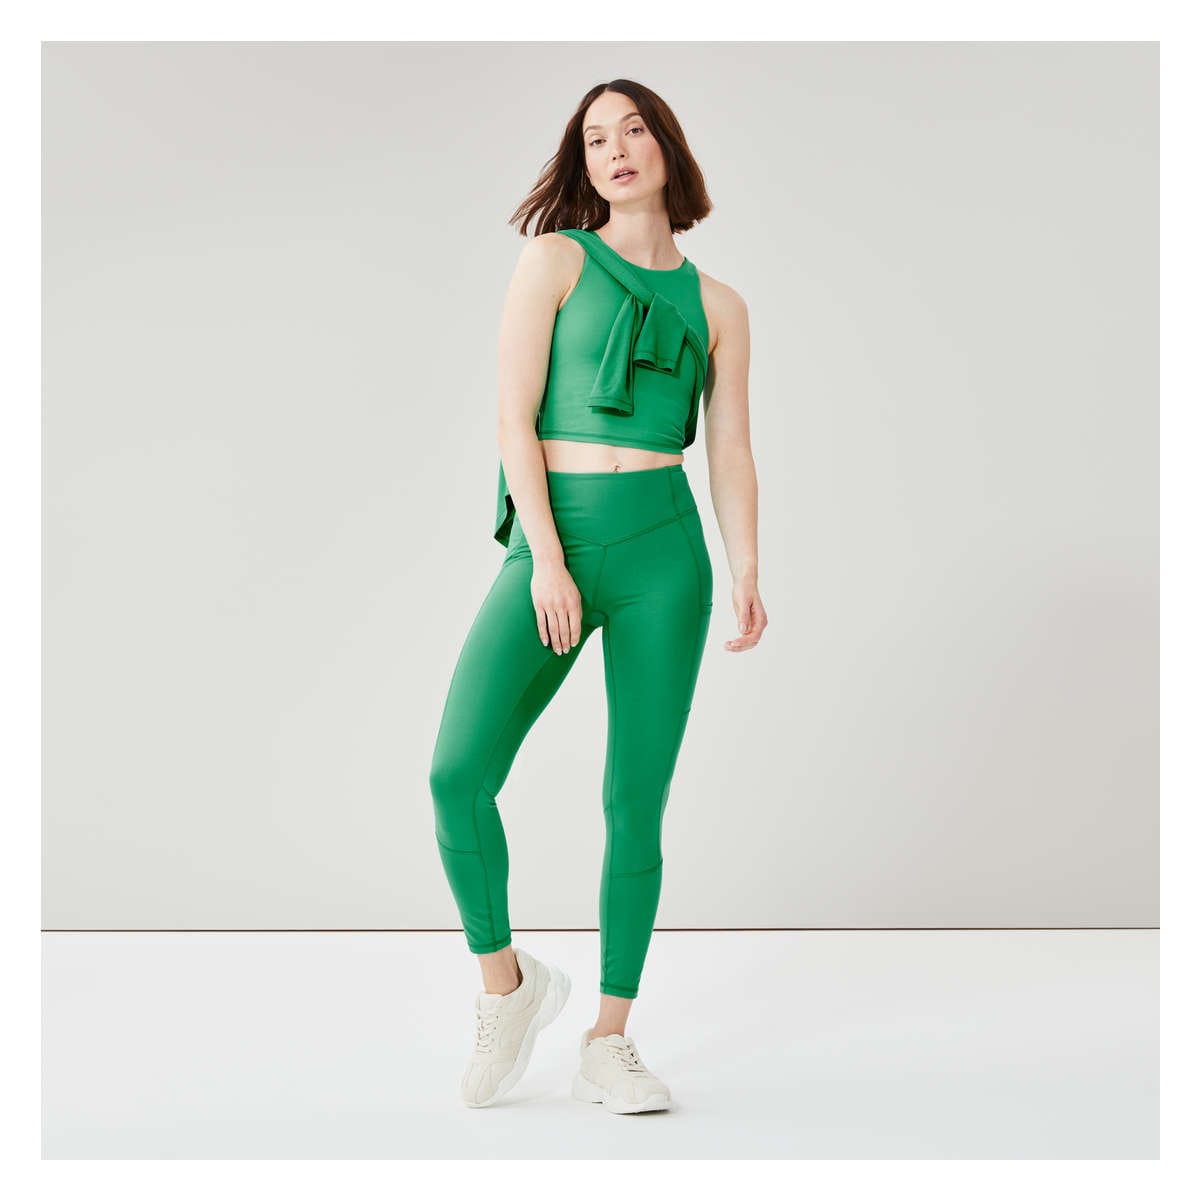 Leggings & Tights - Green - women - Shop your favorite brands